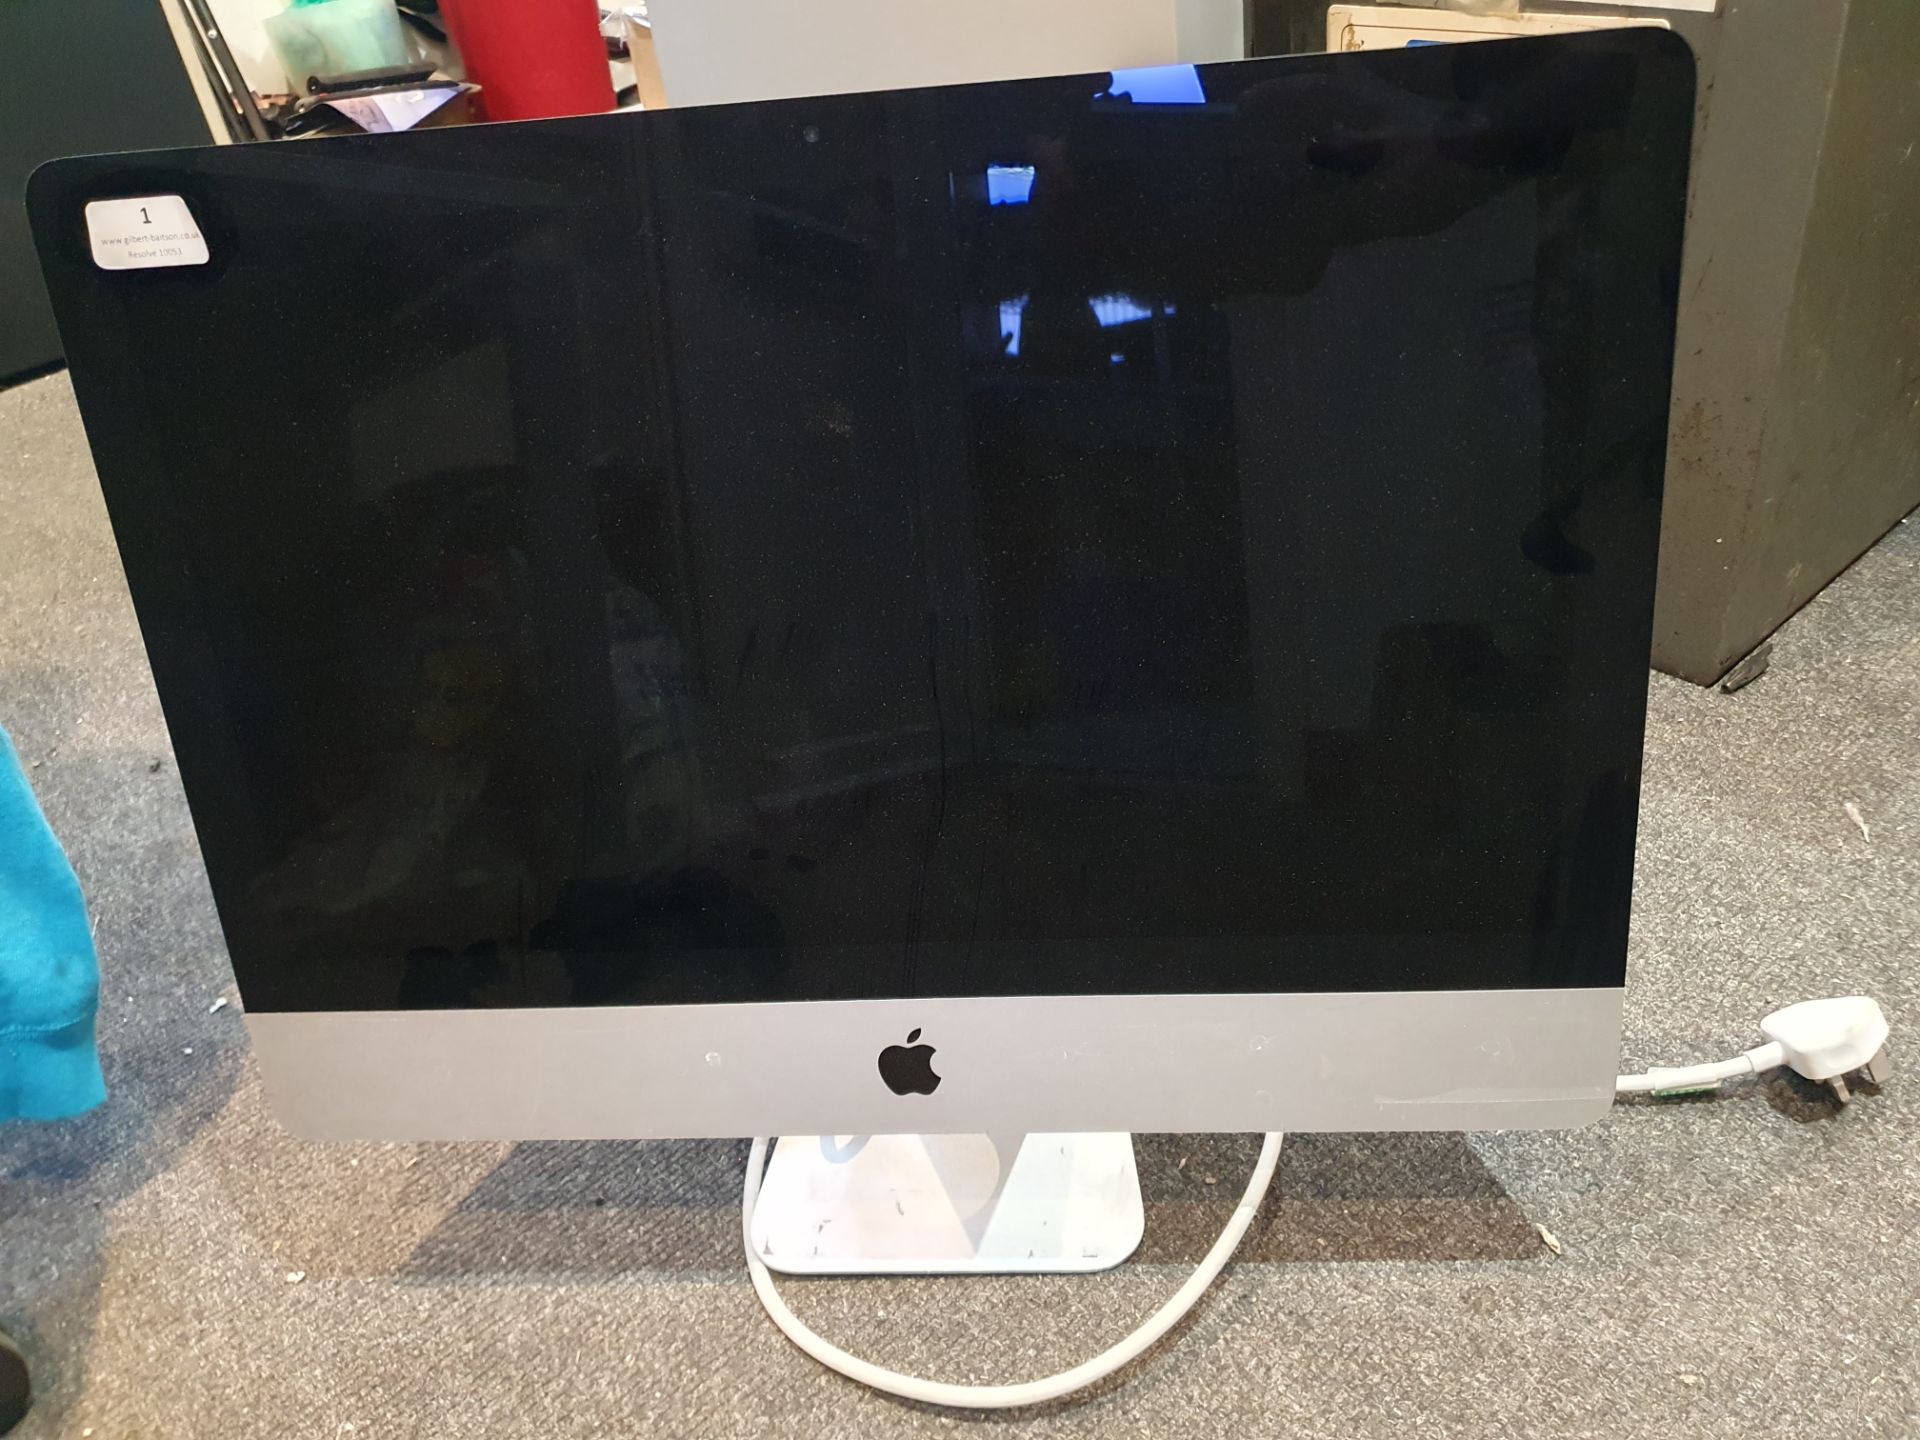 * iMac (21.5-inch, Late 2013)